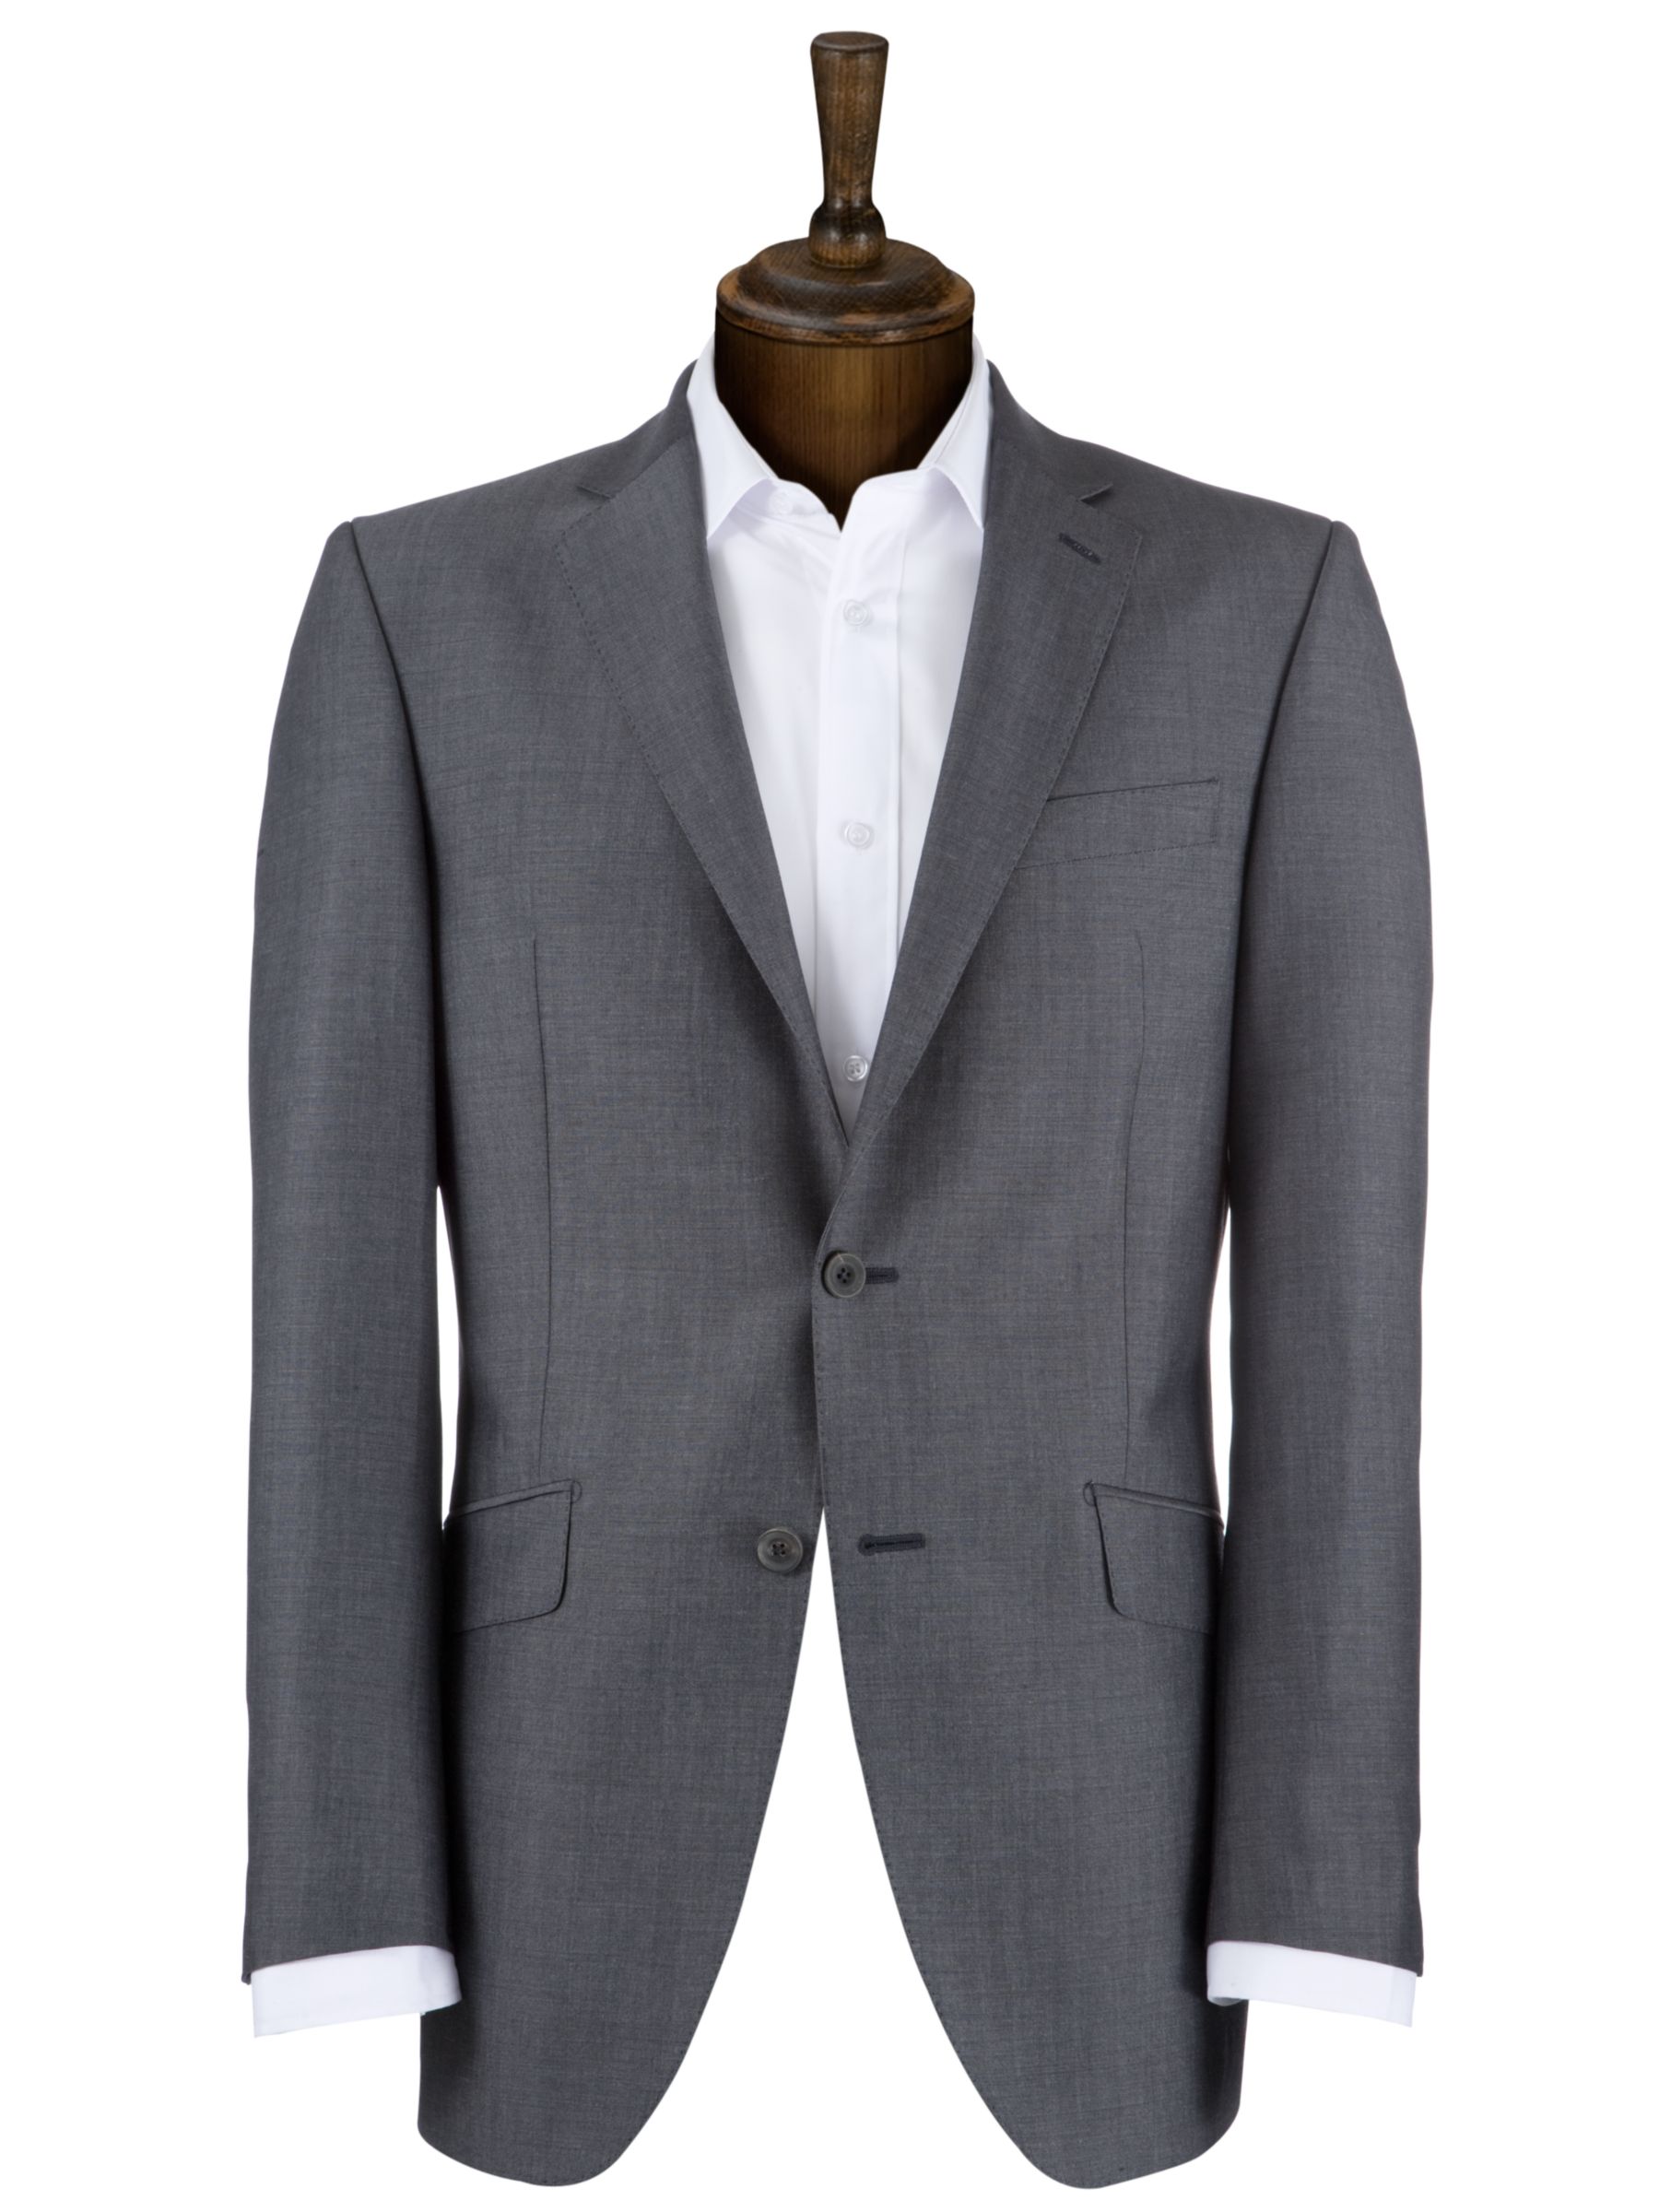 Mayfair Richard James Wool & Mohair Suit Jacket, Grey at JohnLewis